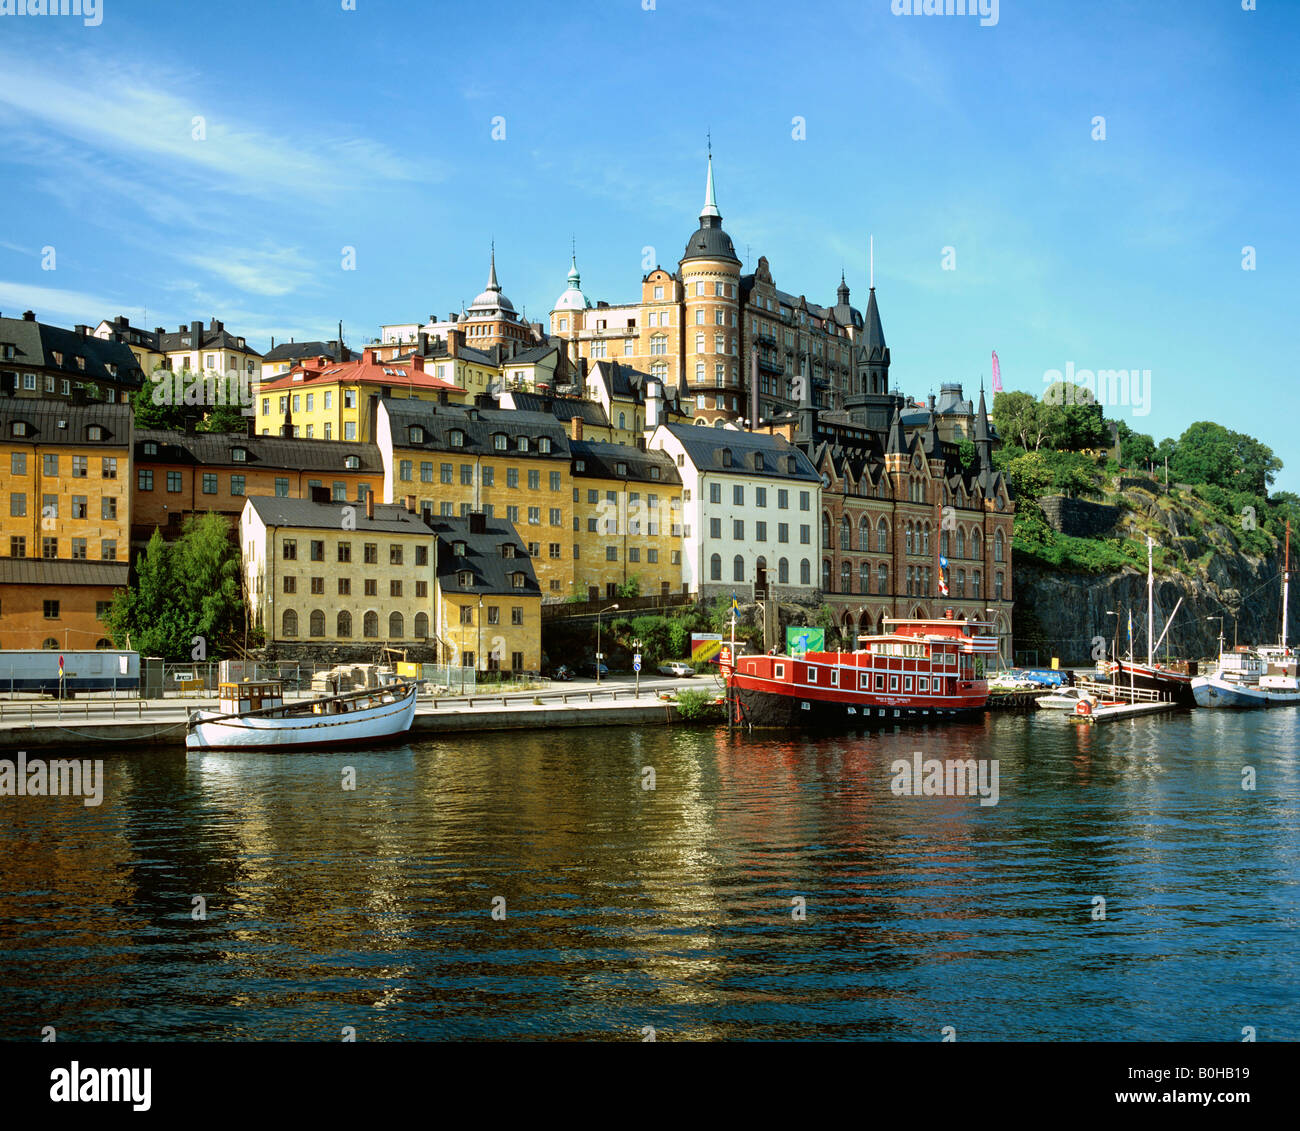 Restaurant ship, Stockholm, Sweden, Scandinavia Stock Photo